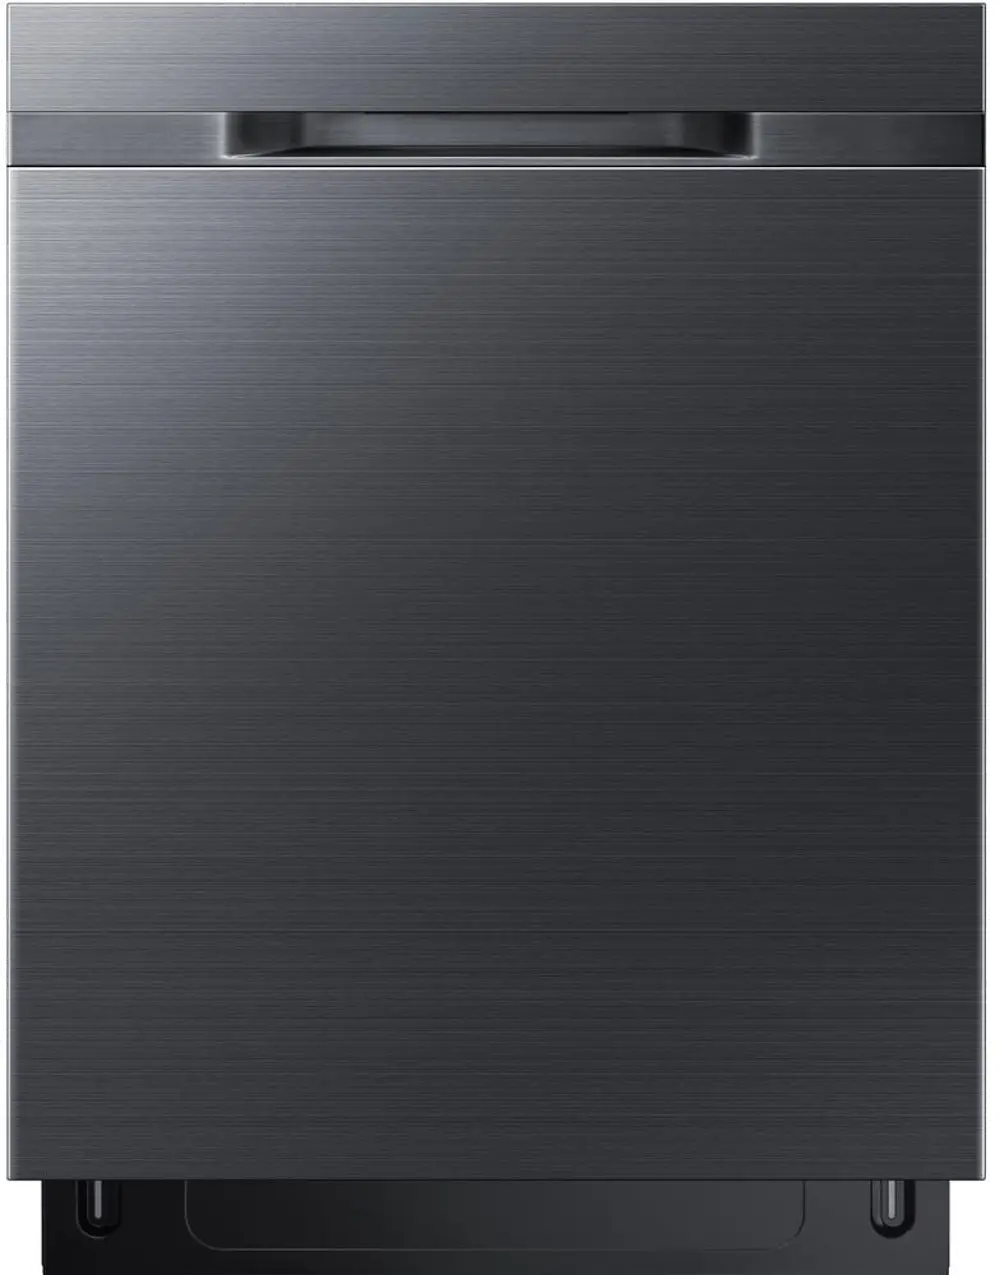 DW80K5050UG Samsung Dishwasher with StormWash - Black Stainless Steel-1